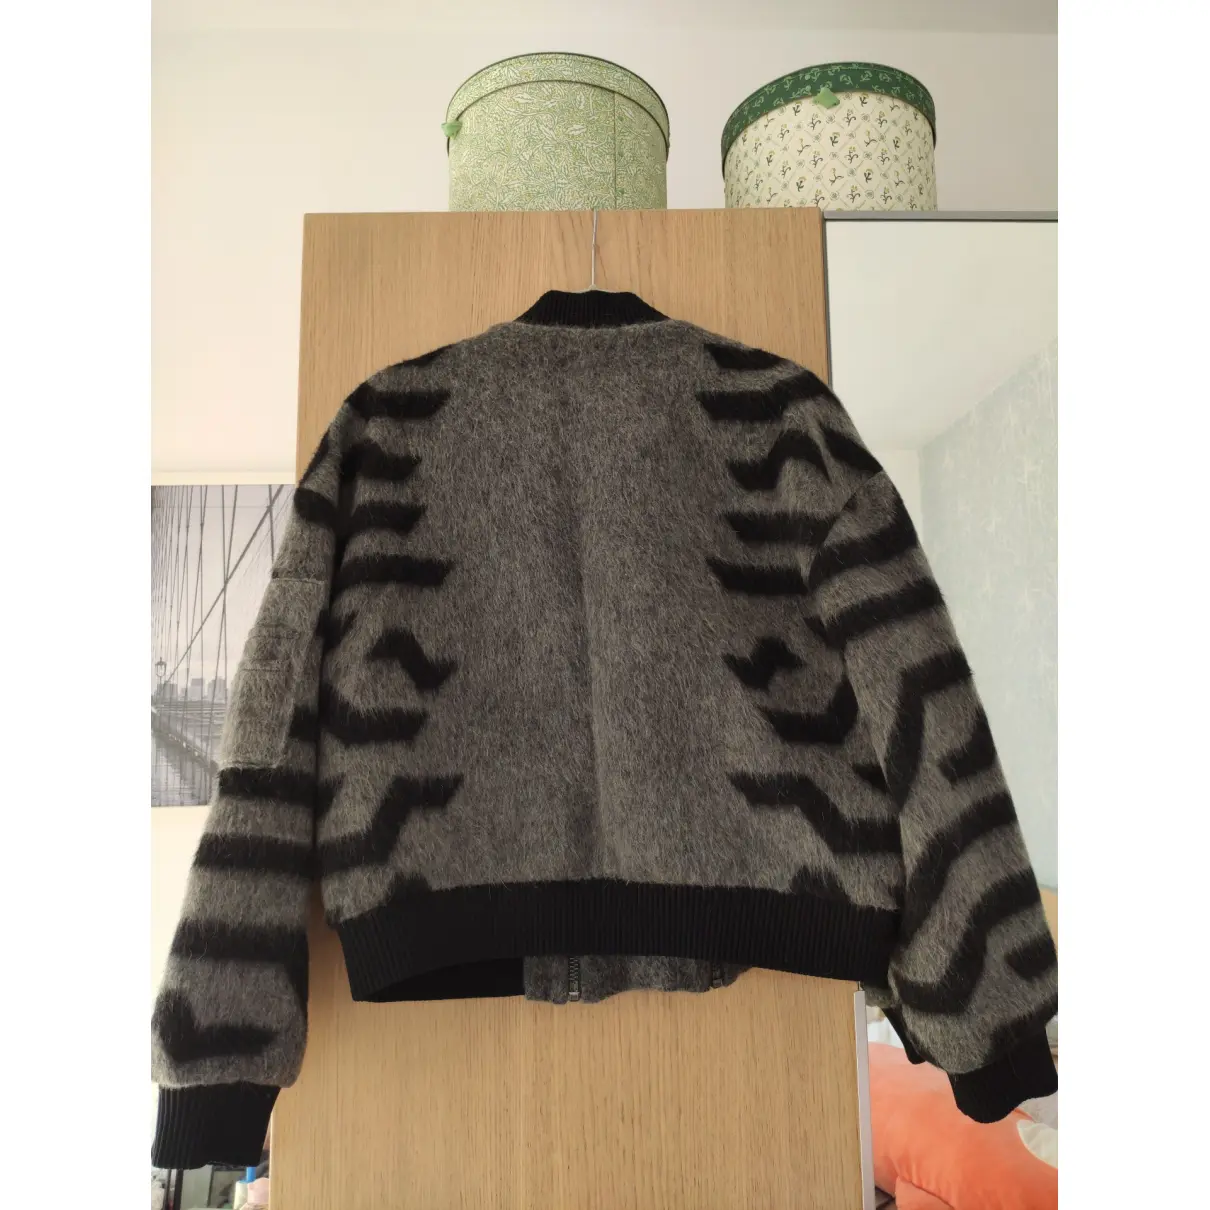 Buy Kenzo Wool jacket online